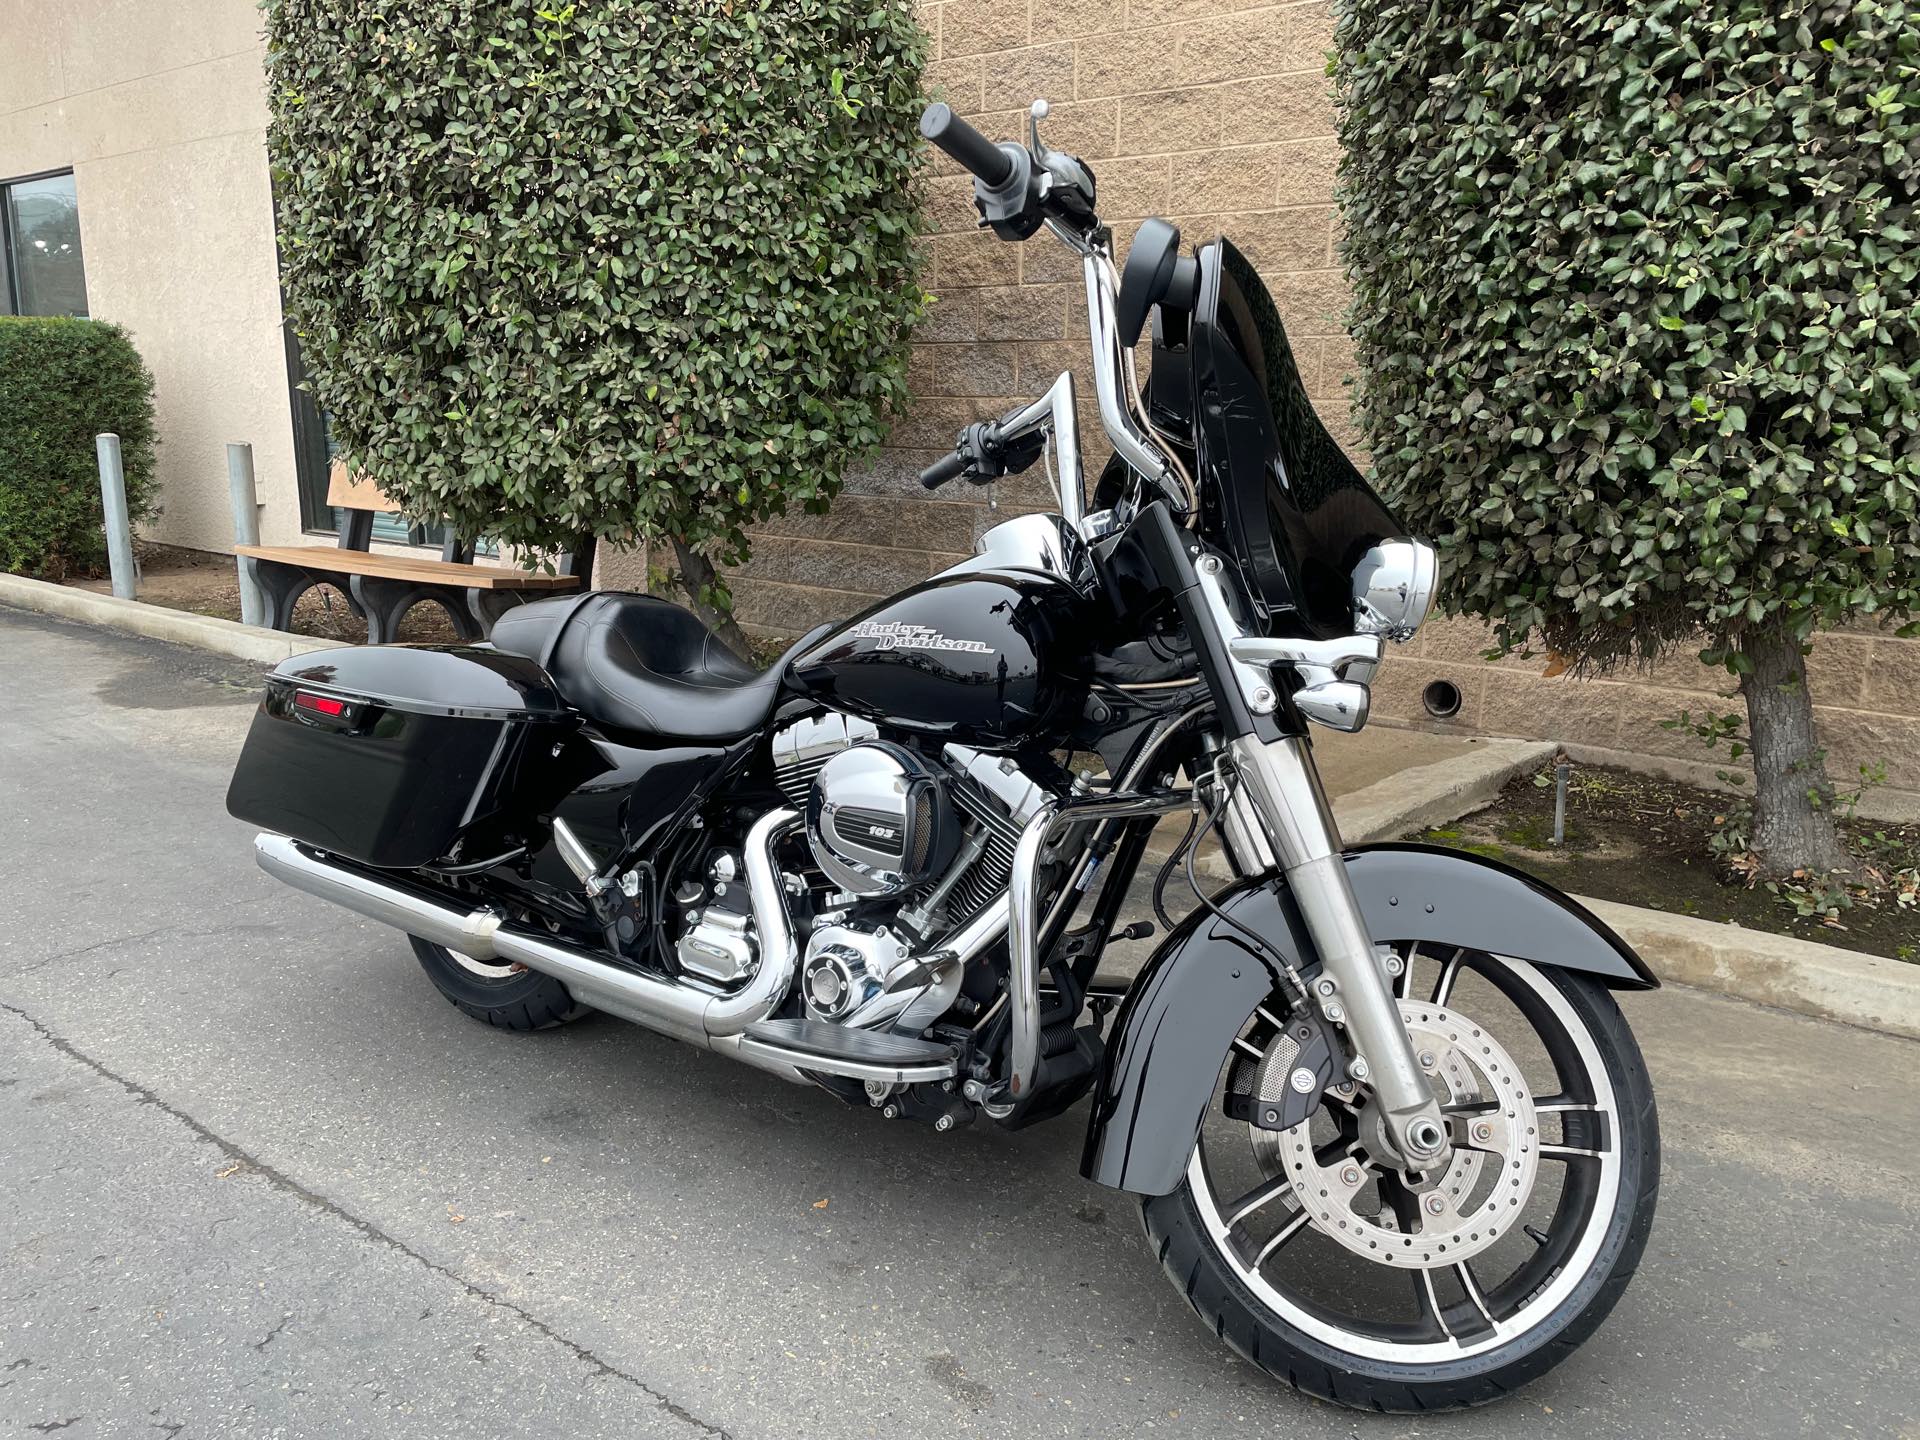 2015 Harley-Davidson Street Glide Special at Fresno Harley-Davidson